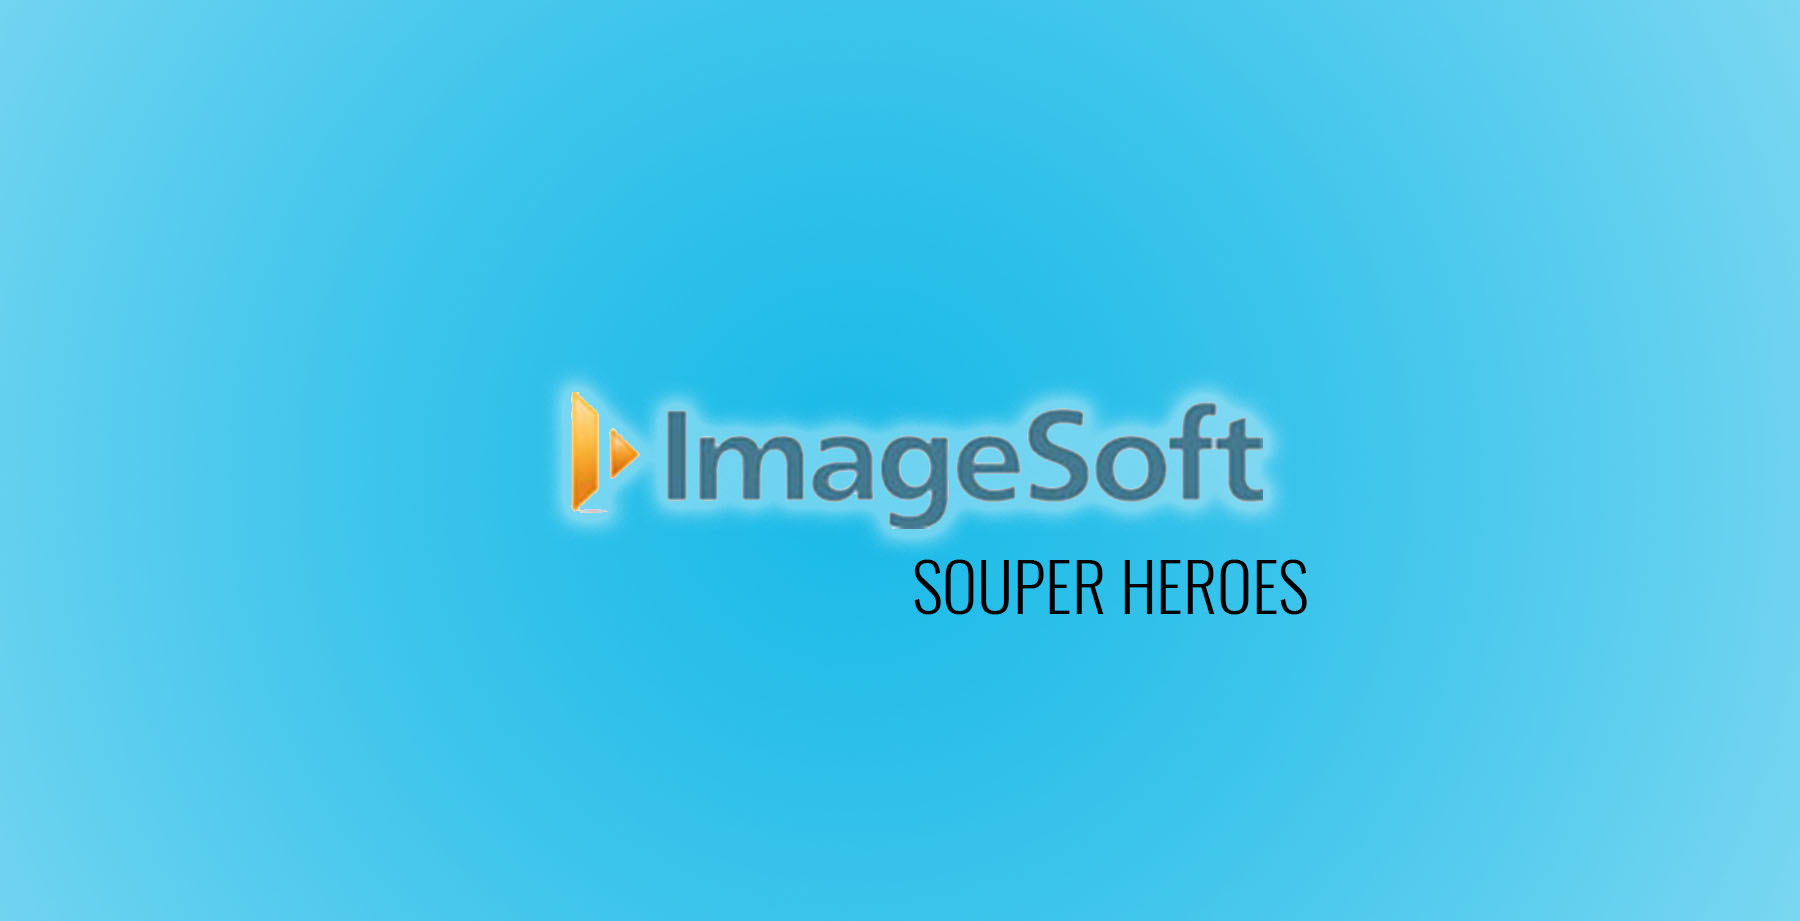 ImageSoft – Souper Heroes